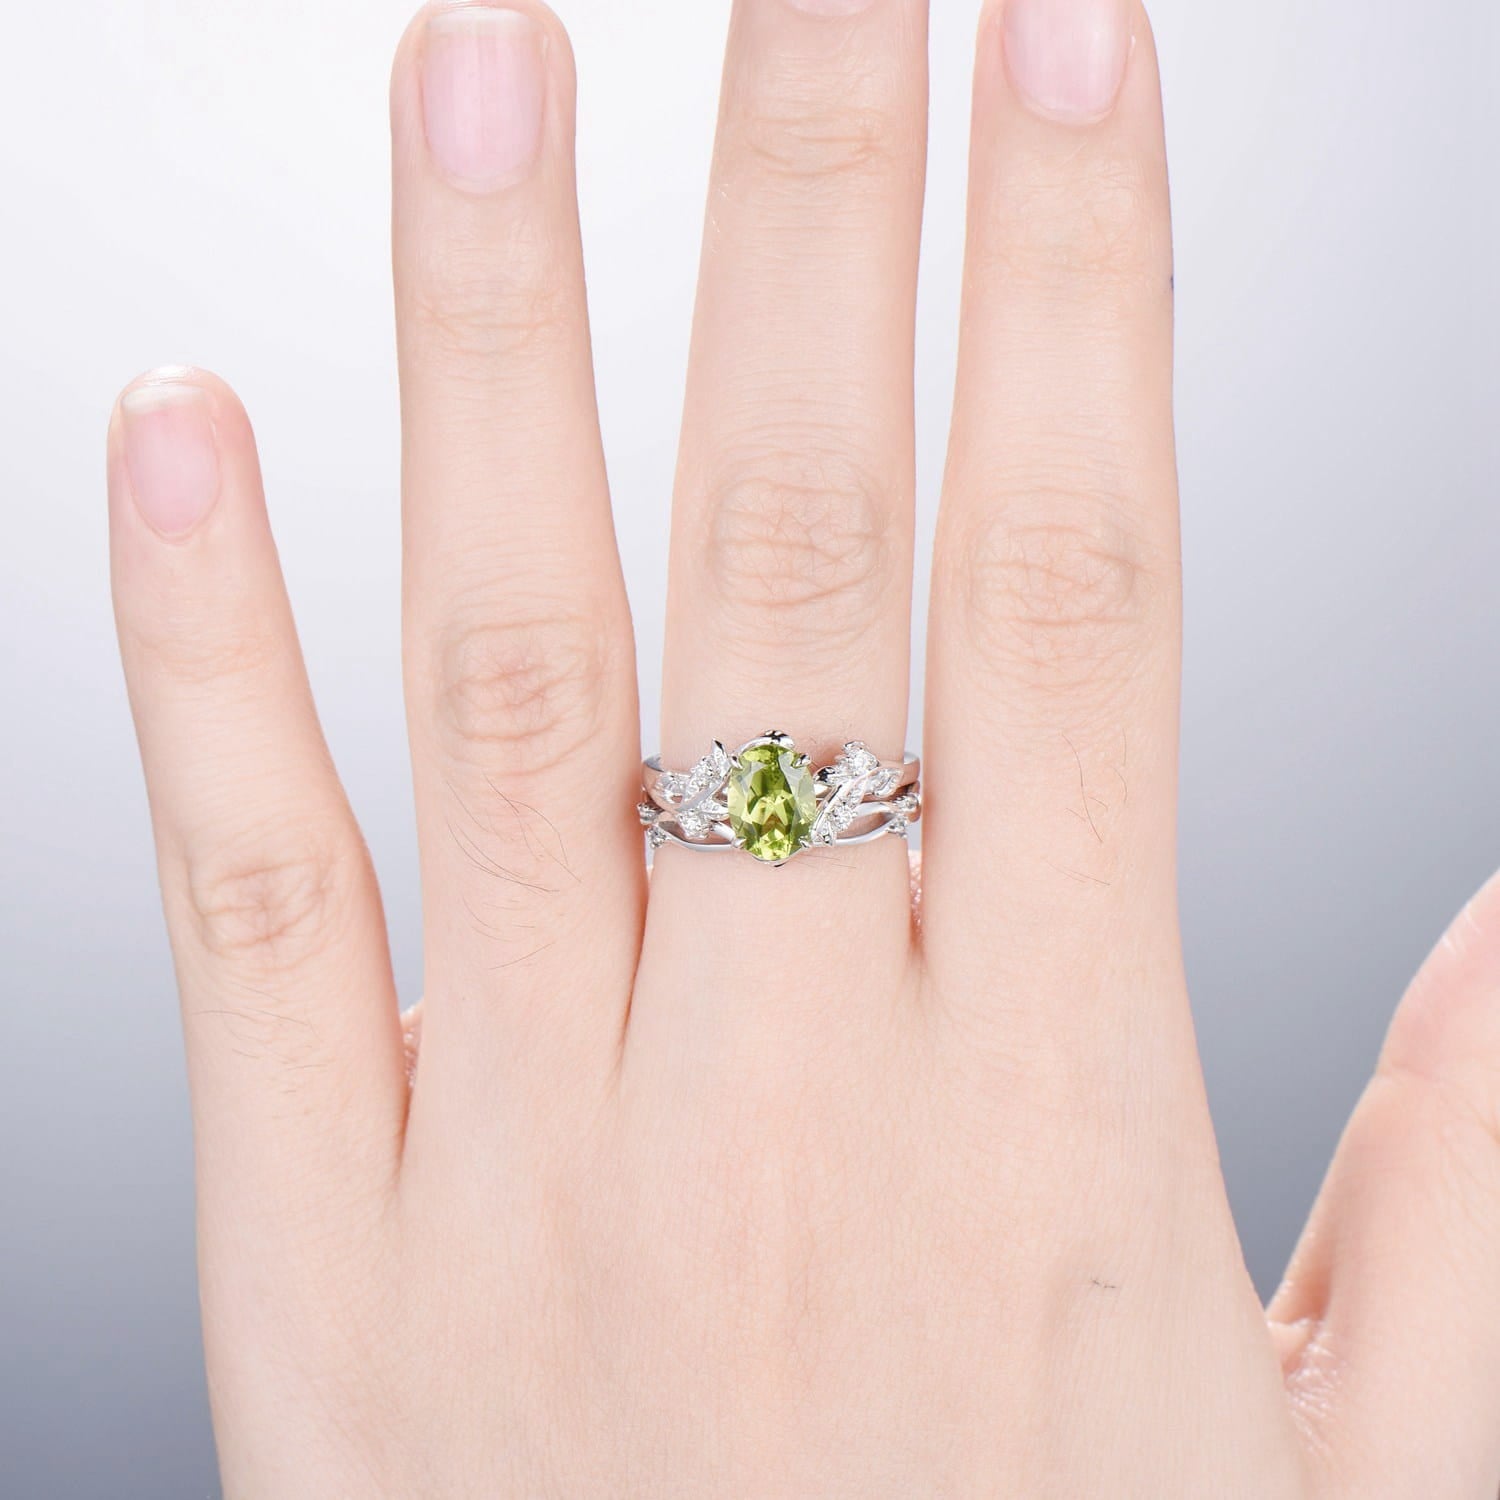 Nature inspired peridot wedding ring set Leaf peridot diamond twig engagement ring set - PENFINE